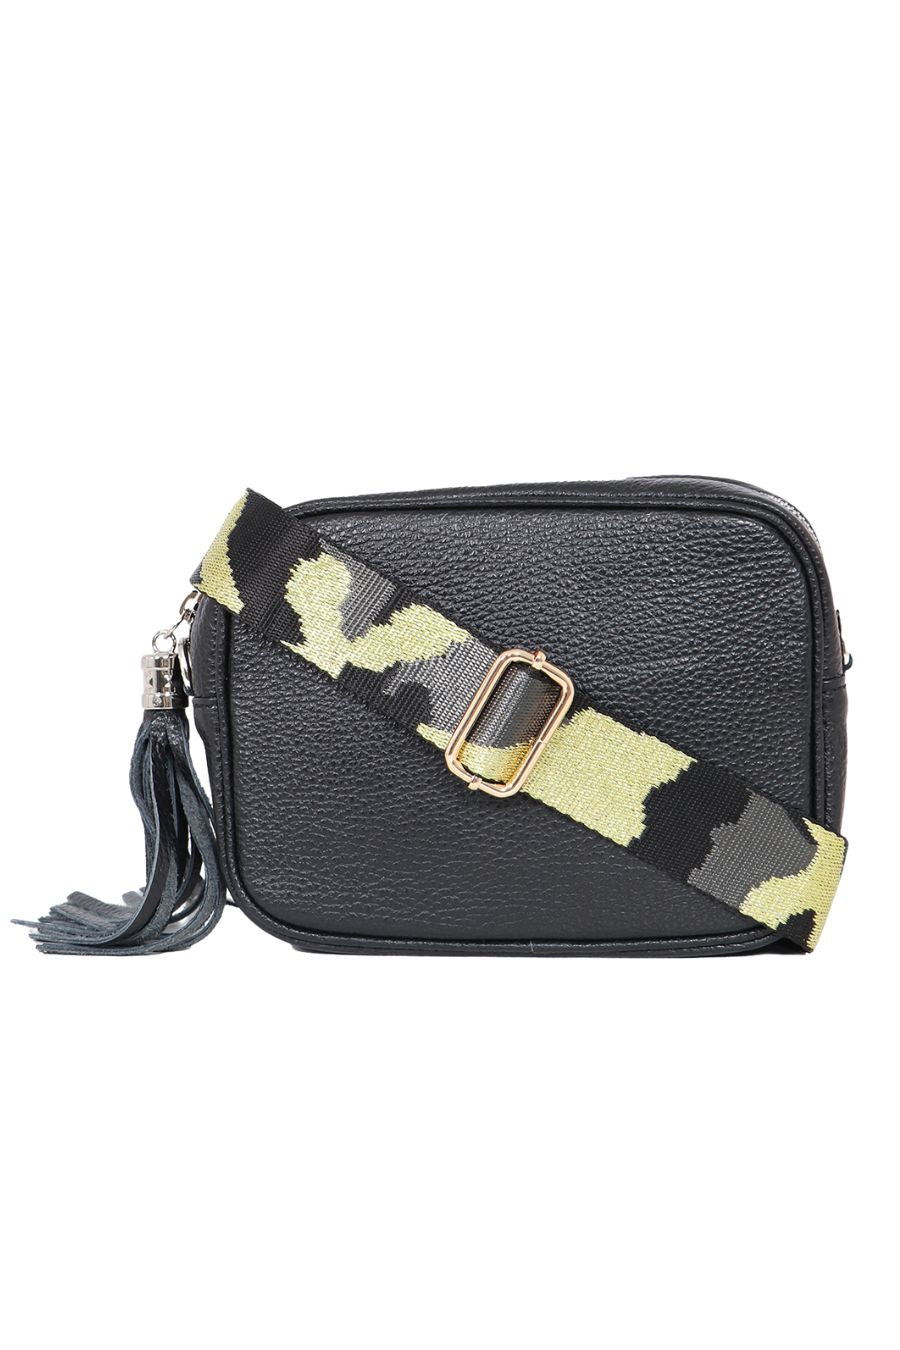 Khaki Glitter Narrow Camouflage Bag Strap (Coded 4149KH)